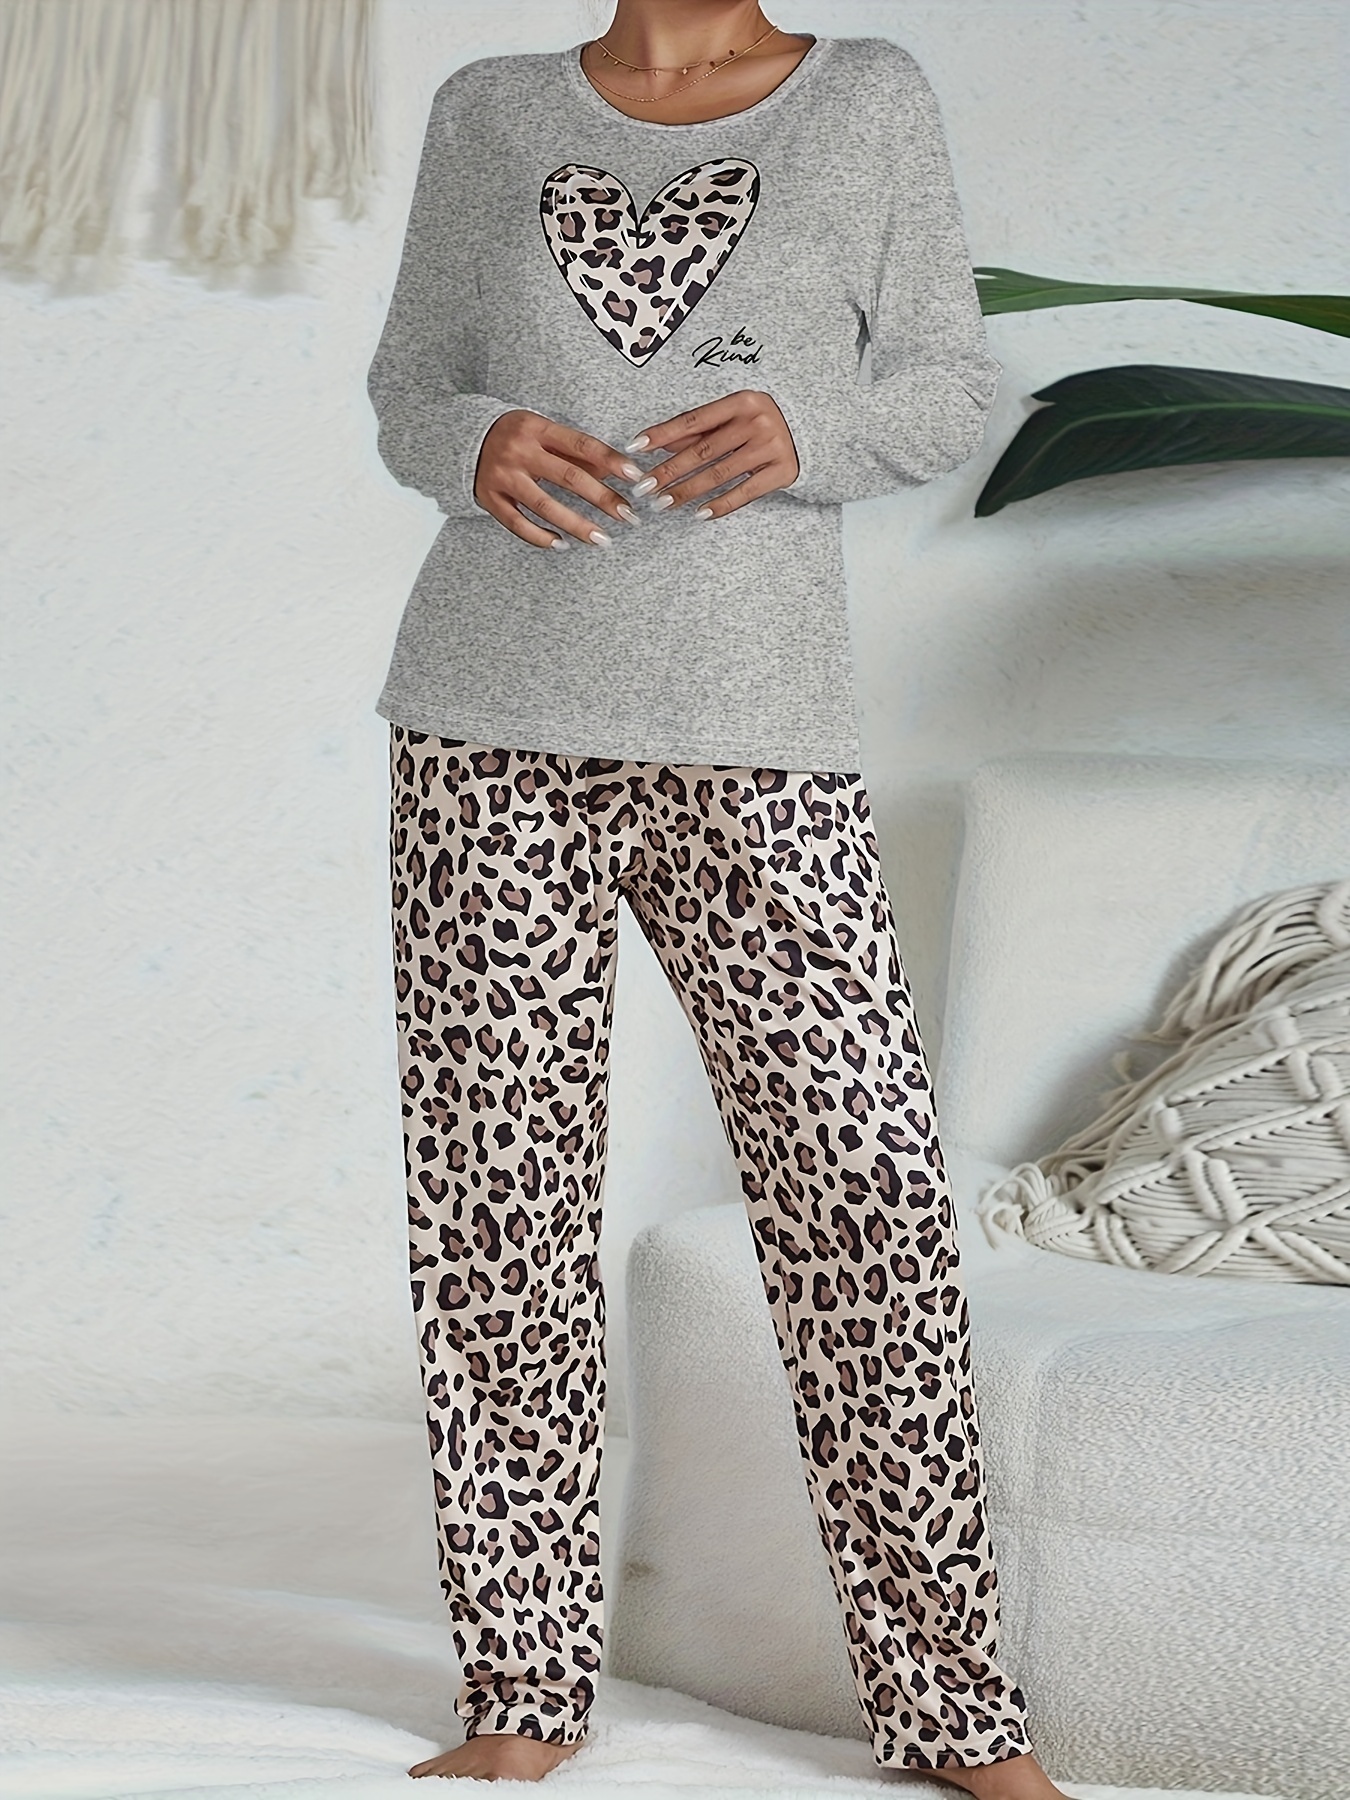 NWT Lucky Brand Ladies' 4-Piece Pajama Set Gray Leopard Print